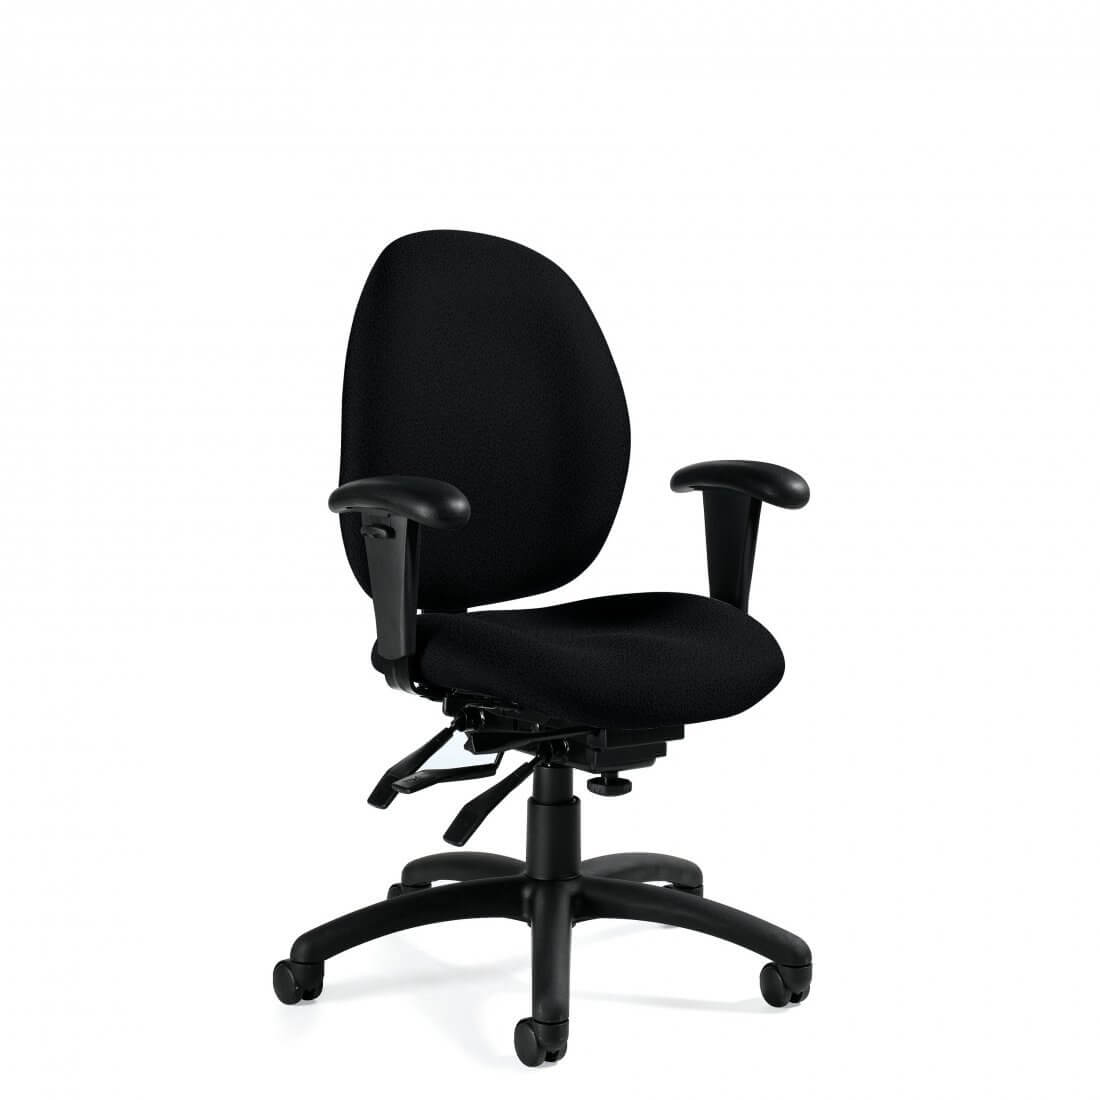 Malaga office furniture chairs low back ergonomics chair